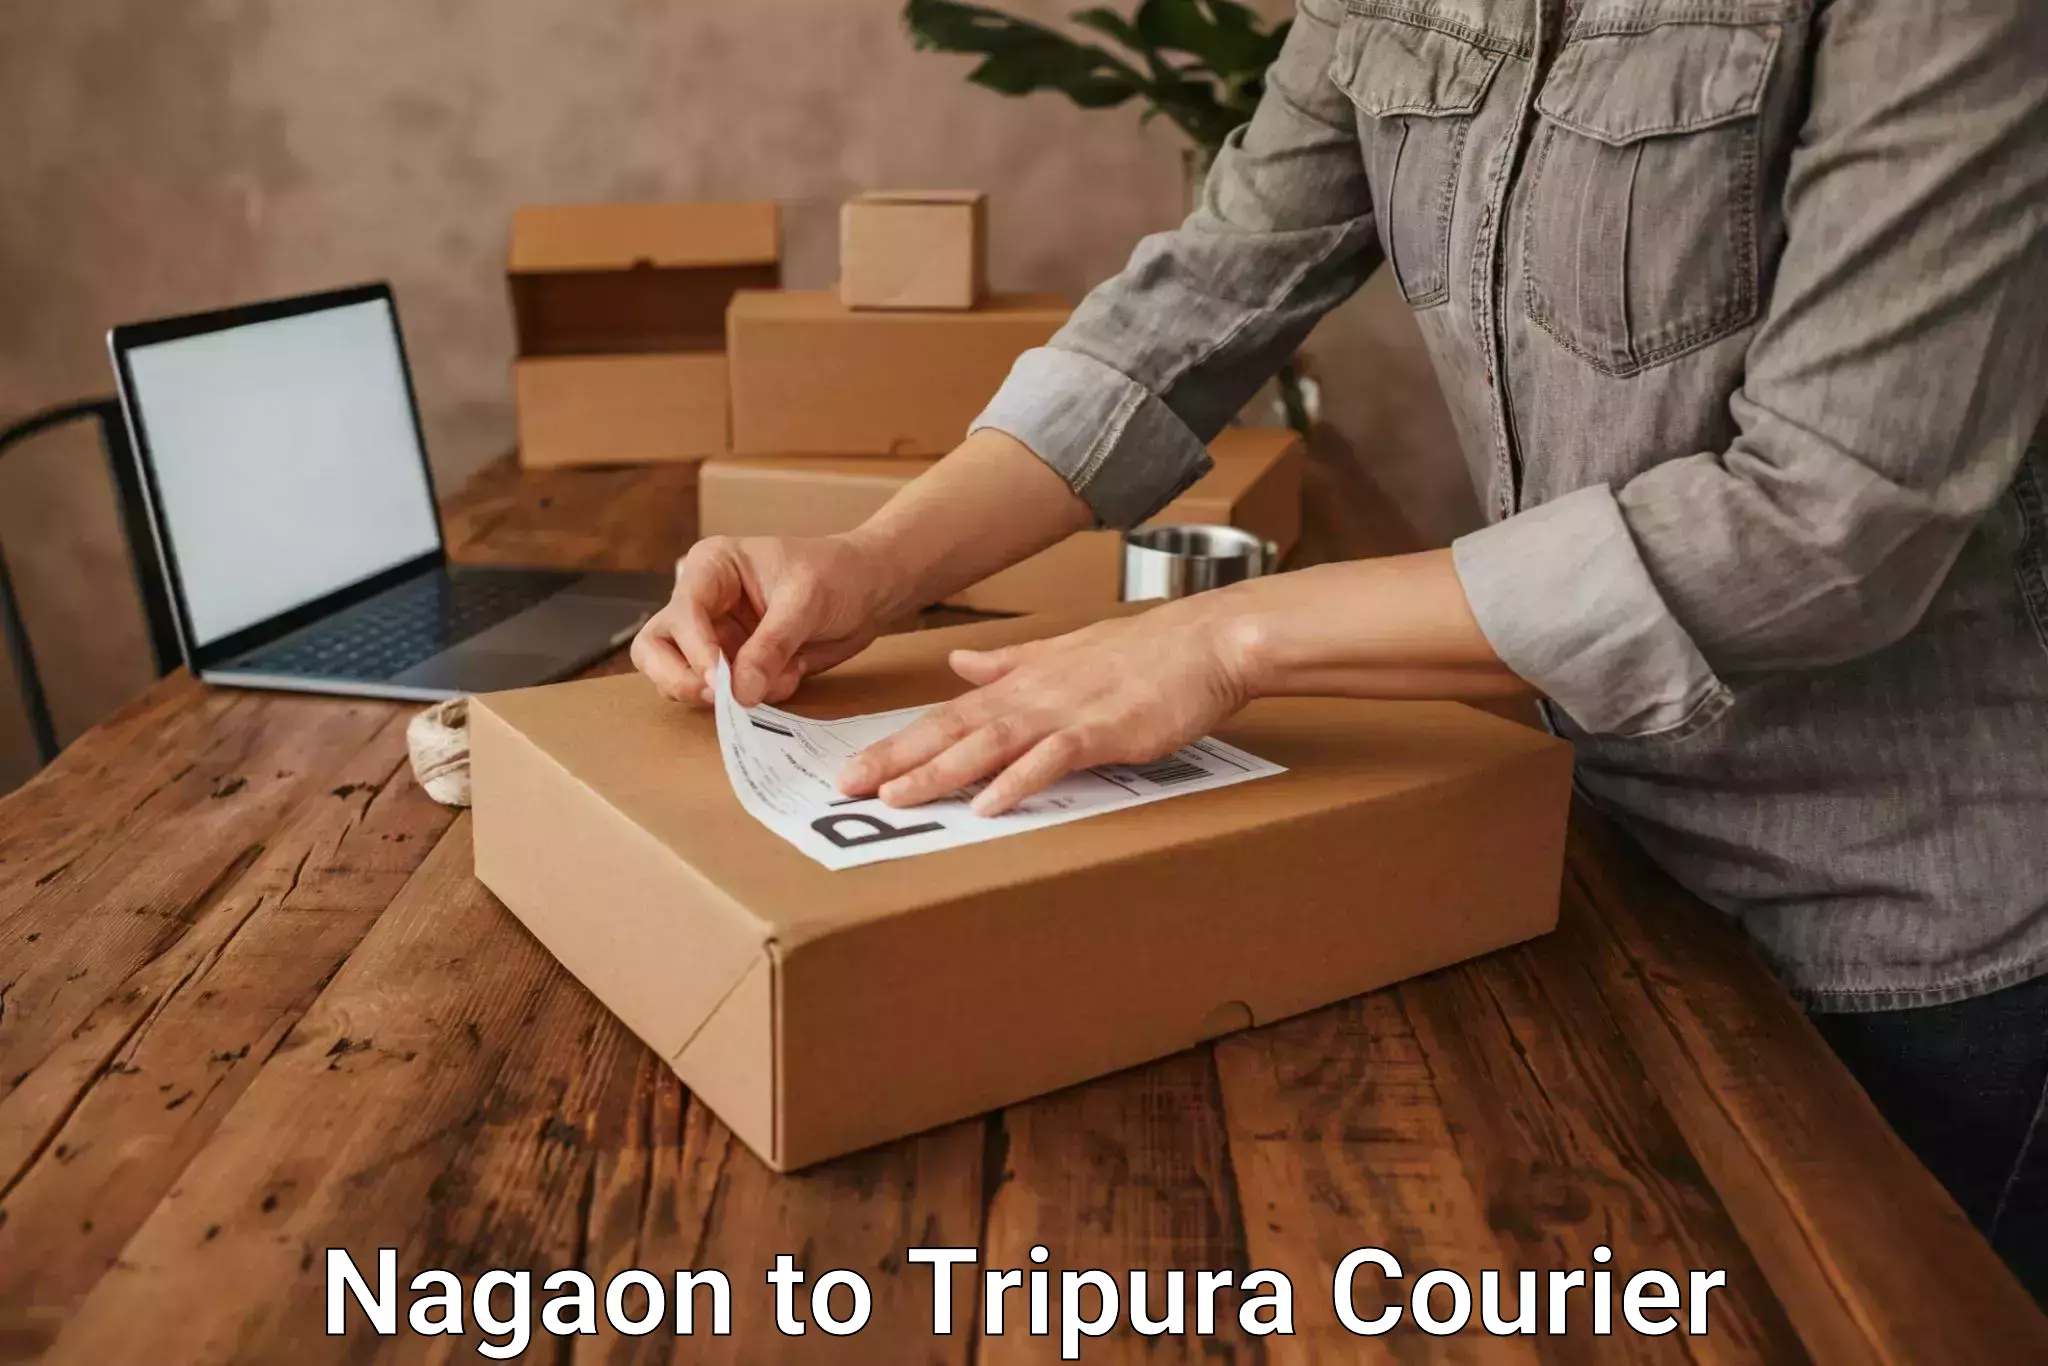 Digital courier platforms Nagaon to Sonamura